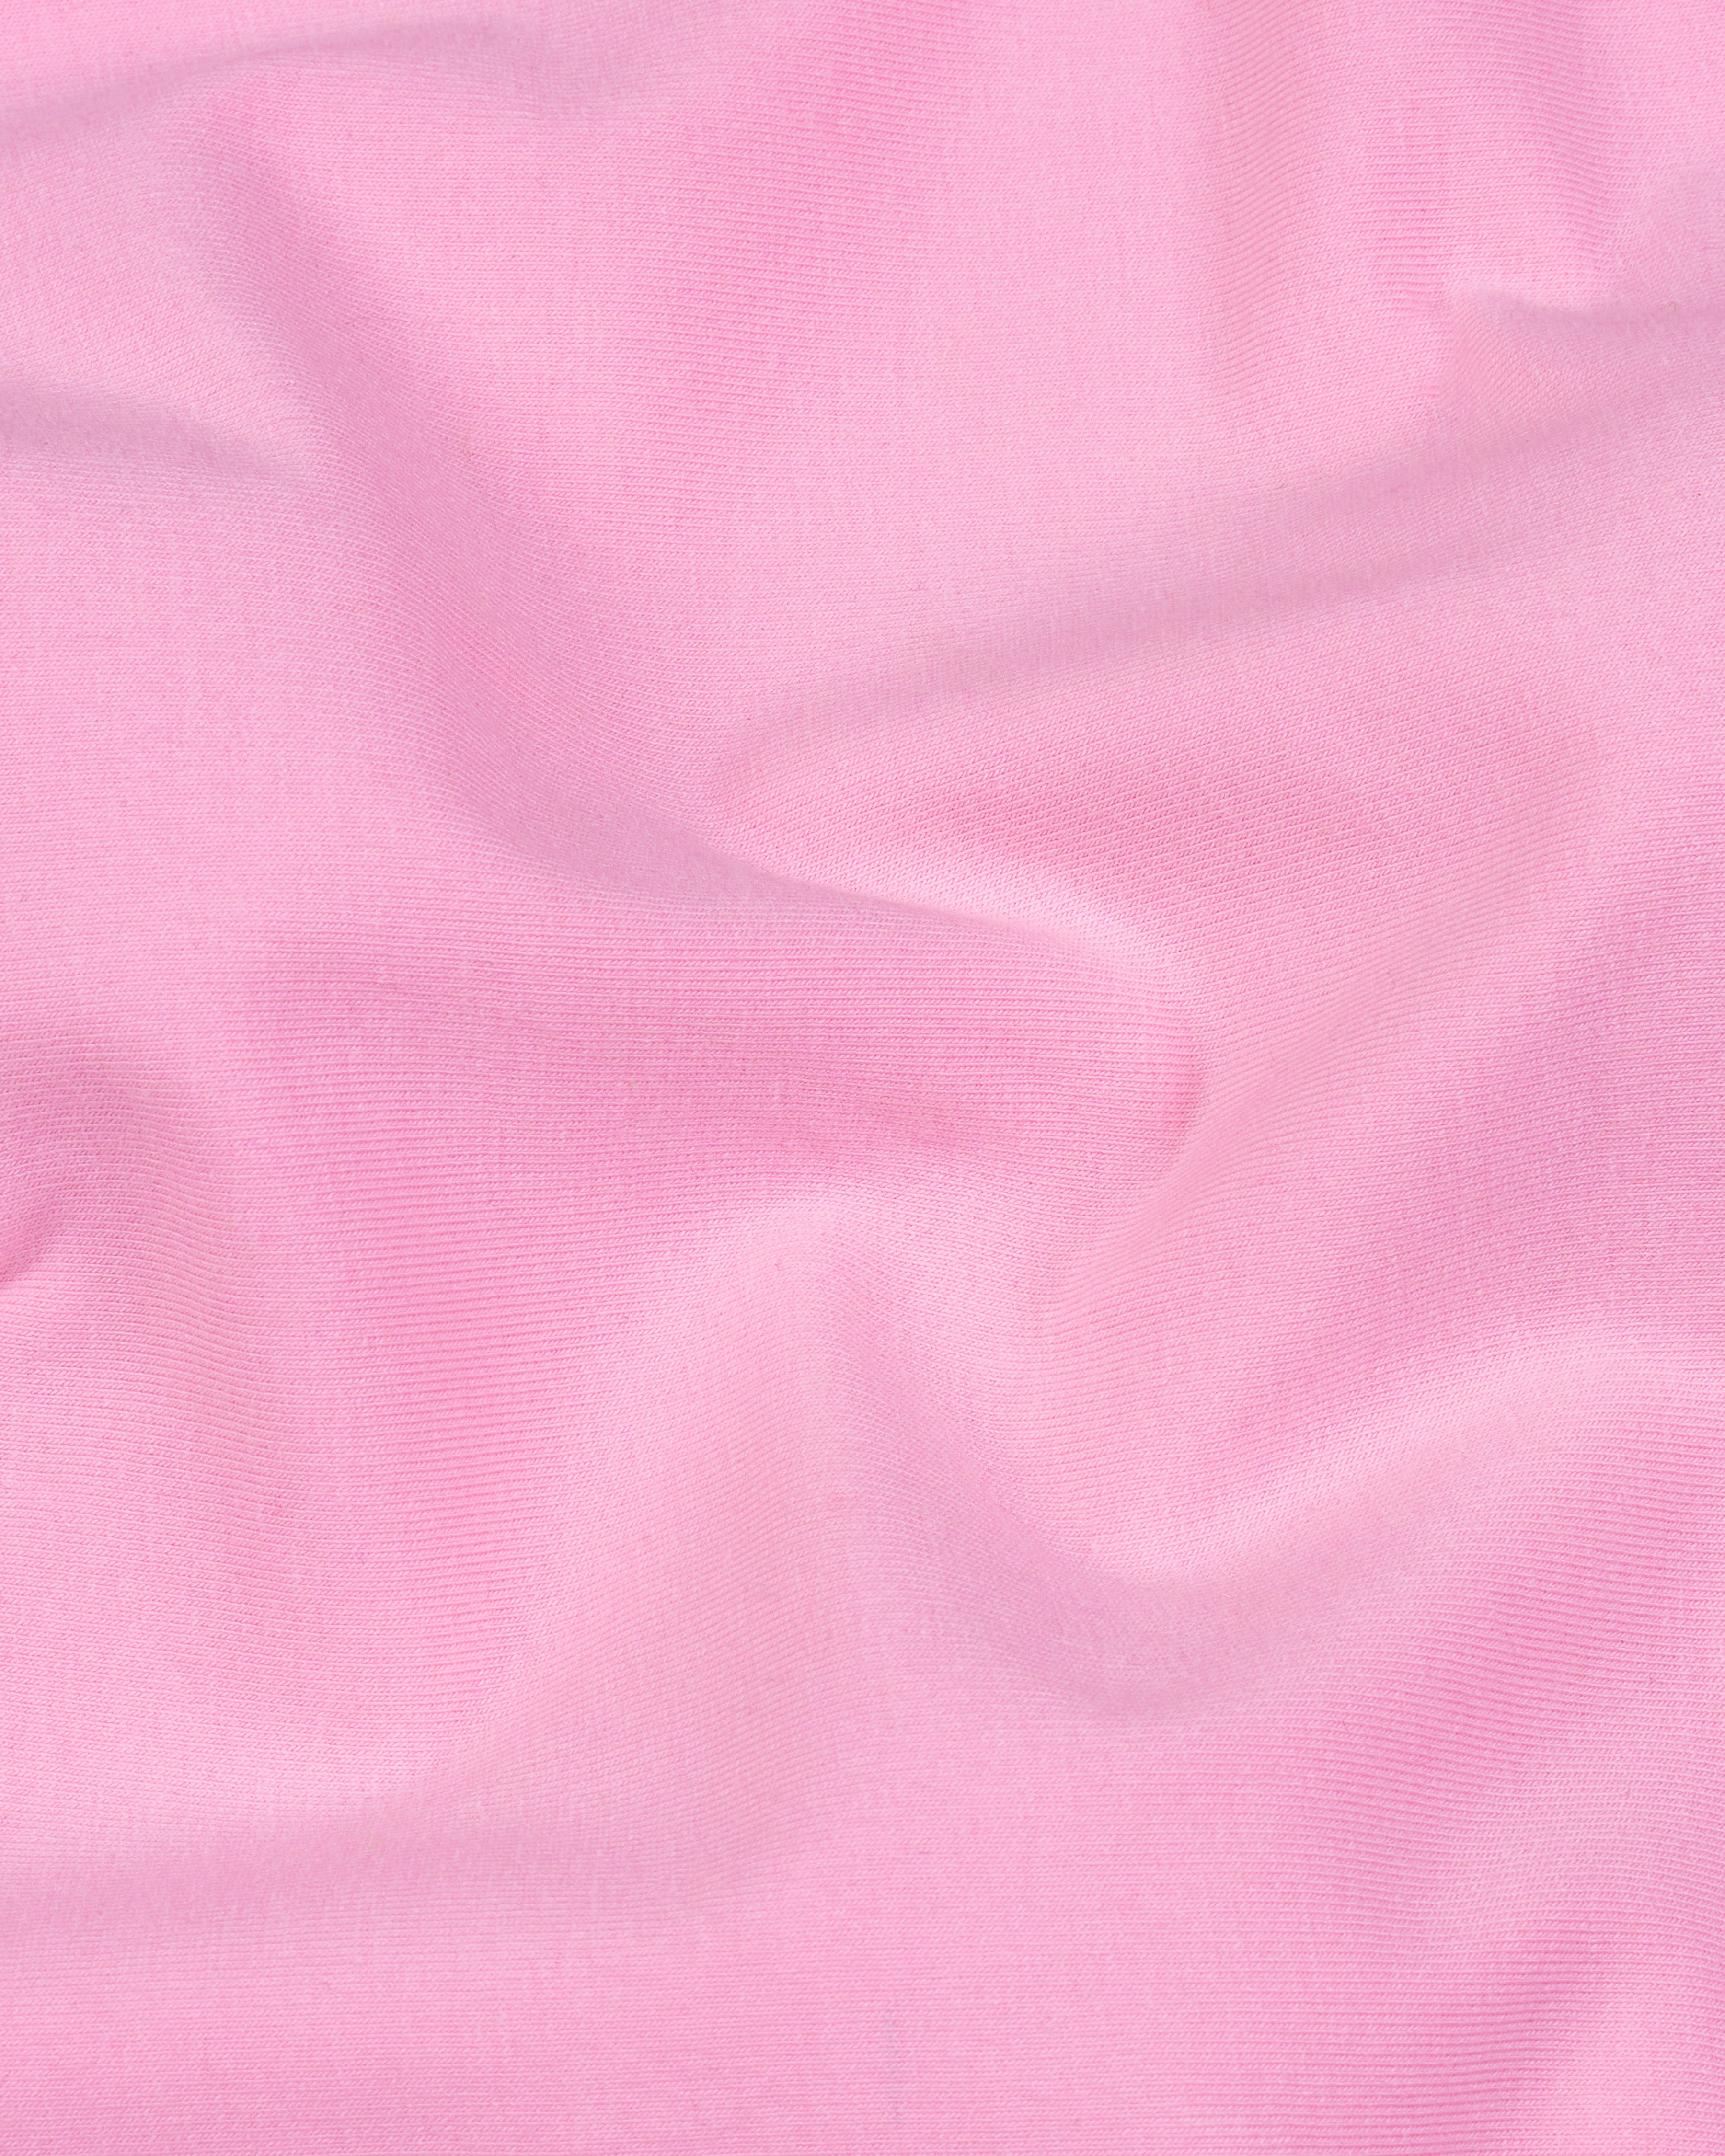 Illusion Pink with Unique Patch Pocket Premium Organic Cotton Designer T-shirt TS103-W01-S, TS103-W01-M, TS103-W01-L, TS103-W01-XL, TS103-W01-XXL